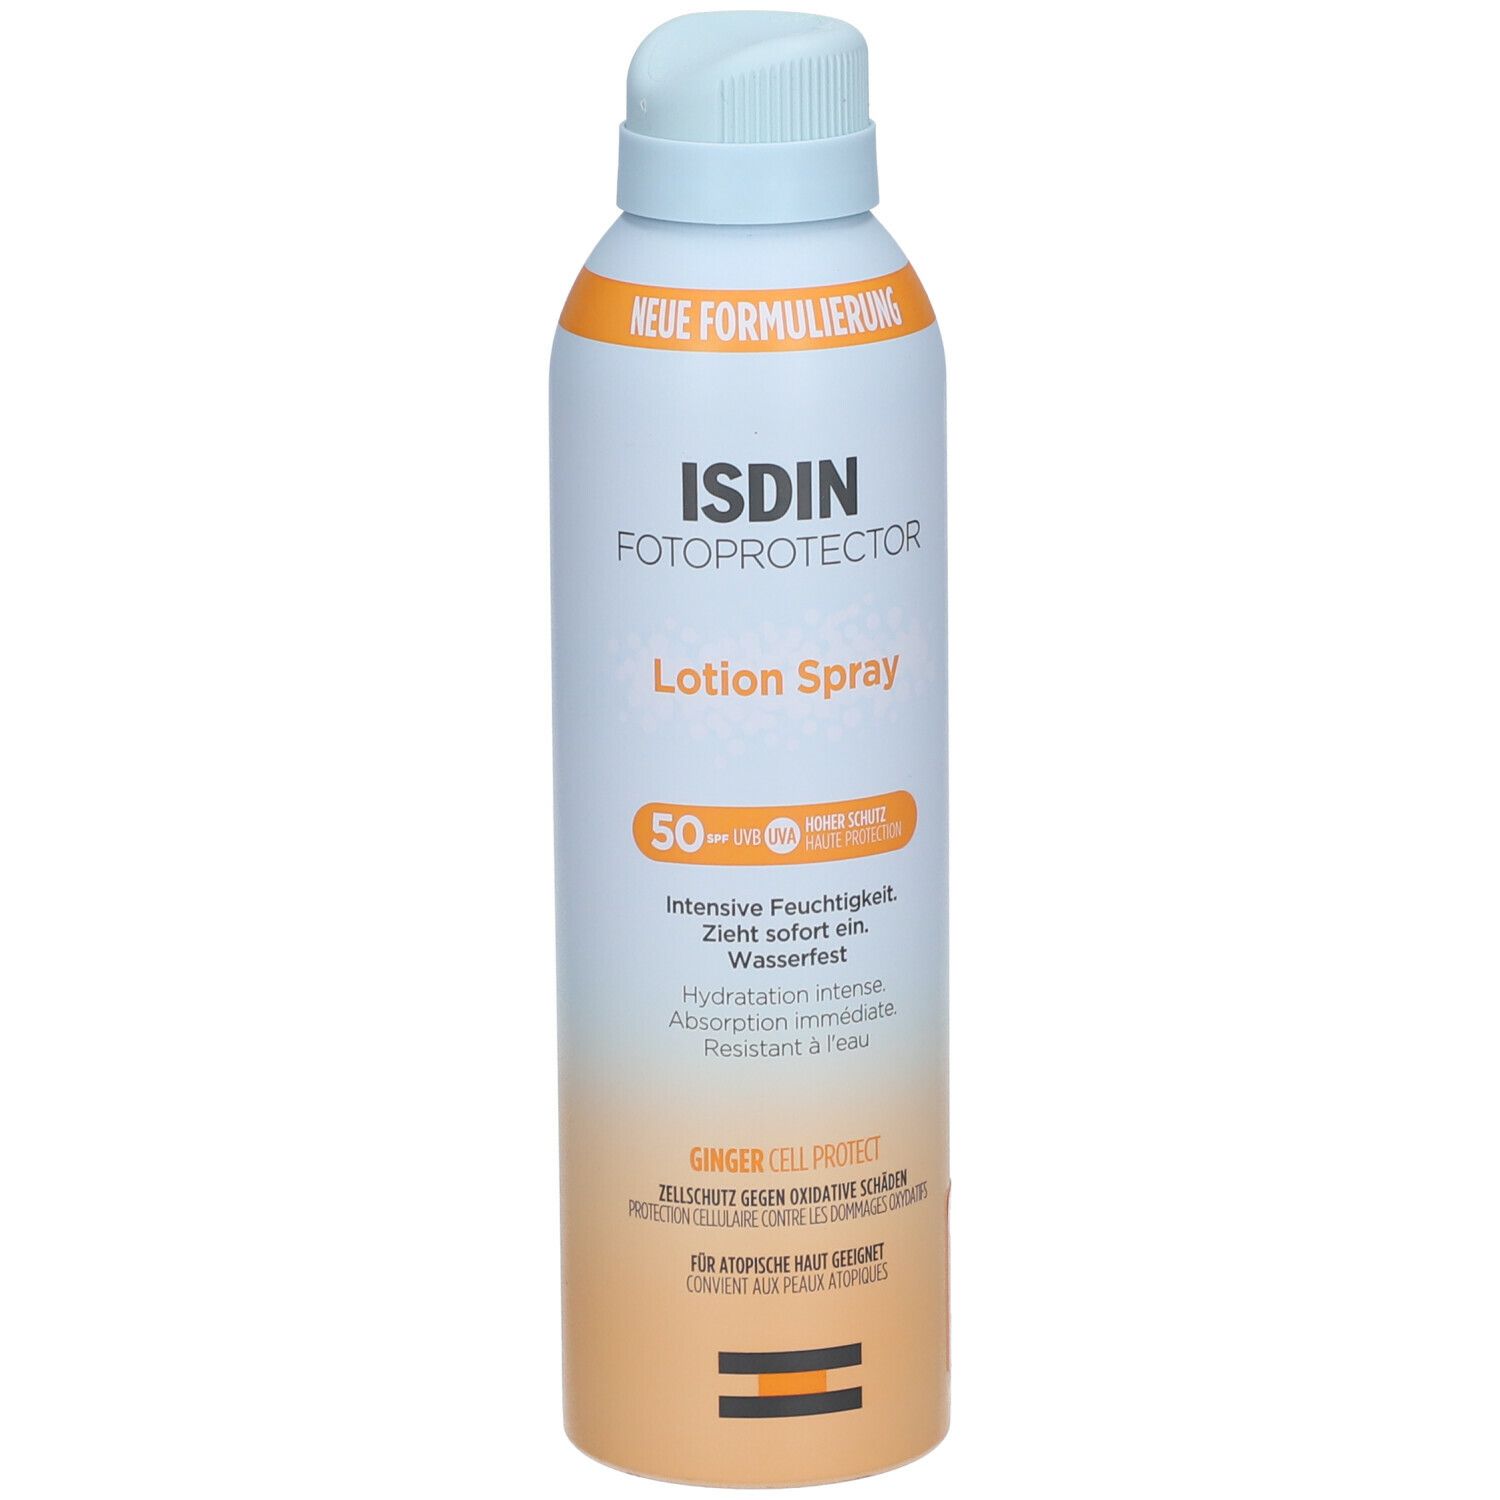 Fotoprotector ISDIN Lotion Spray LSF 50